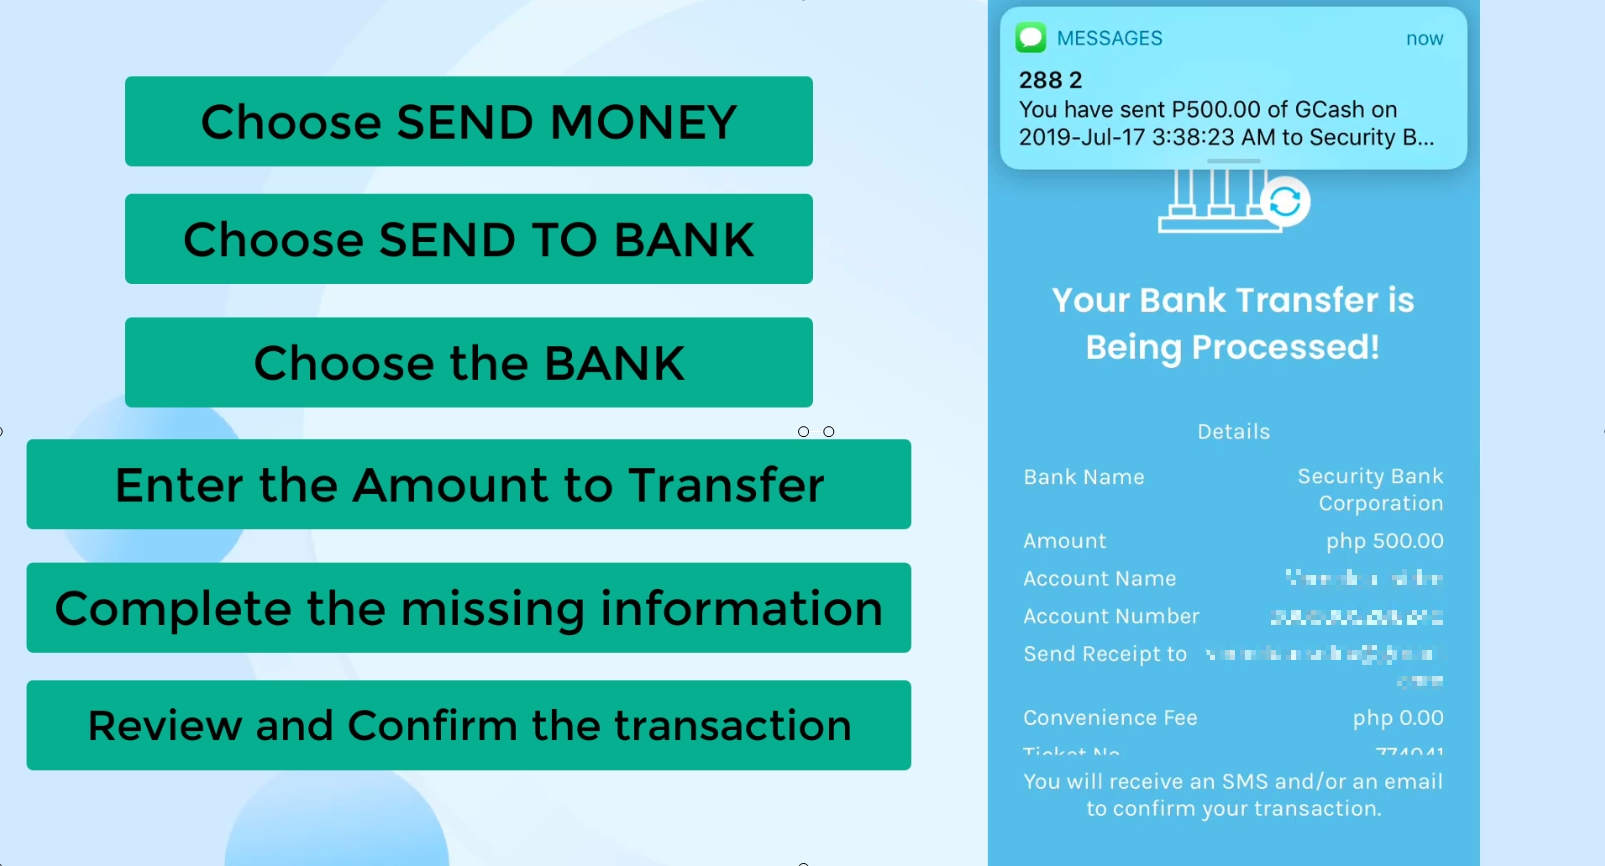 BPI send money security bank using gcash 28